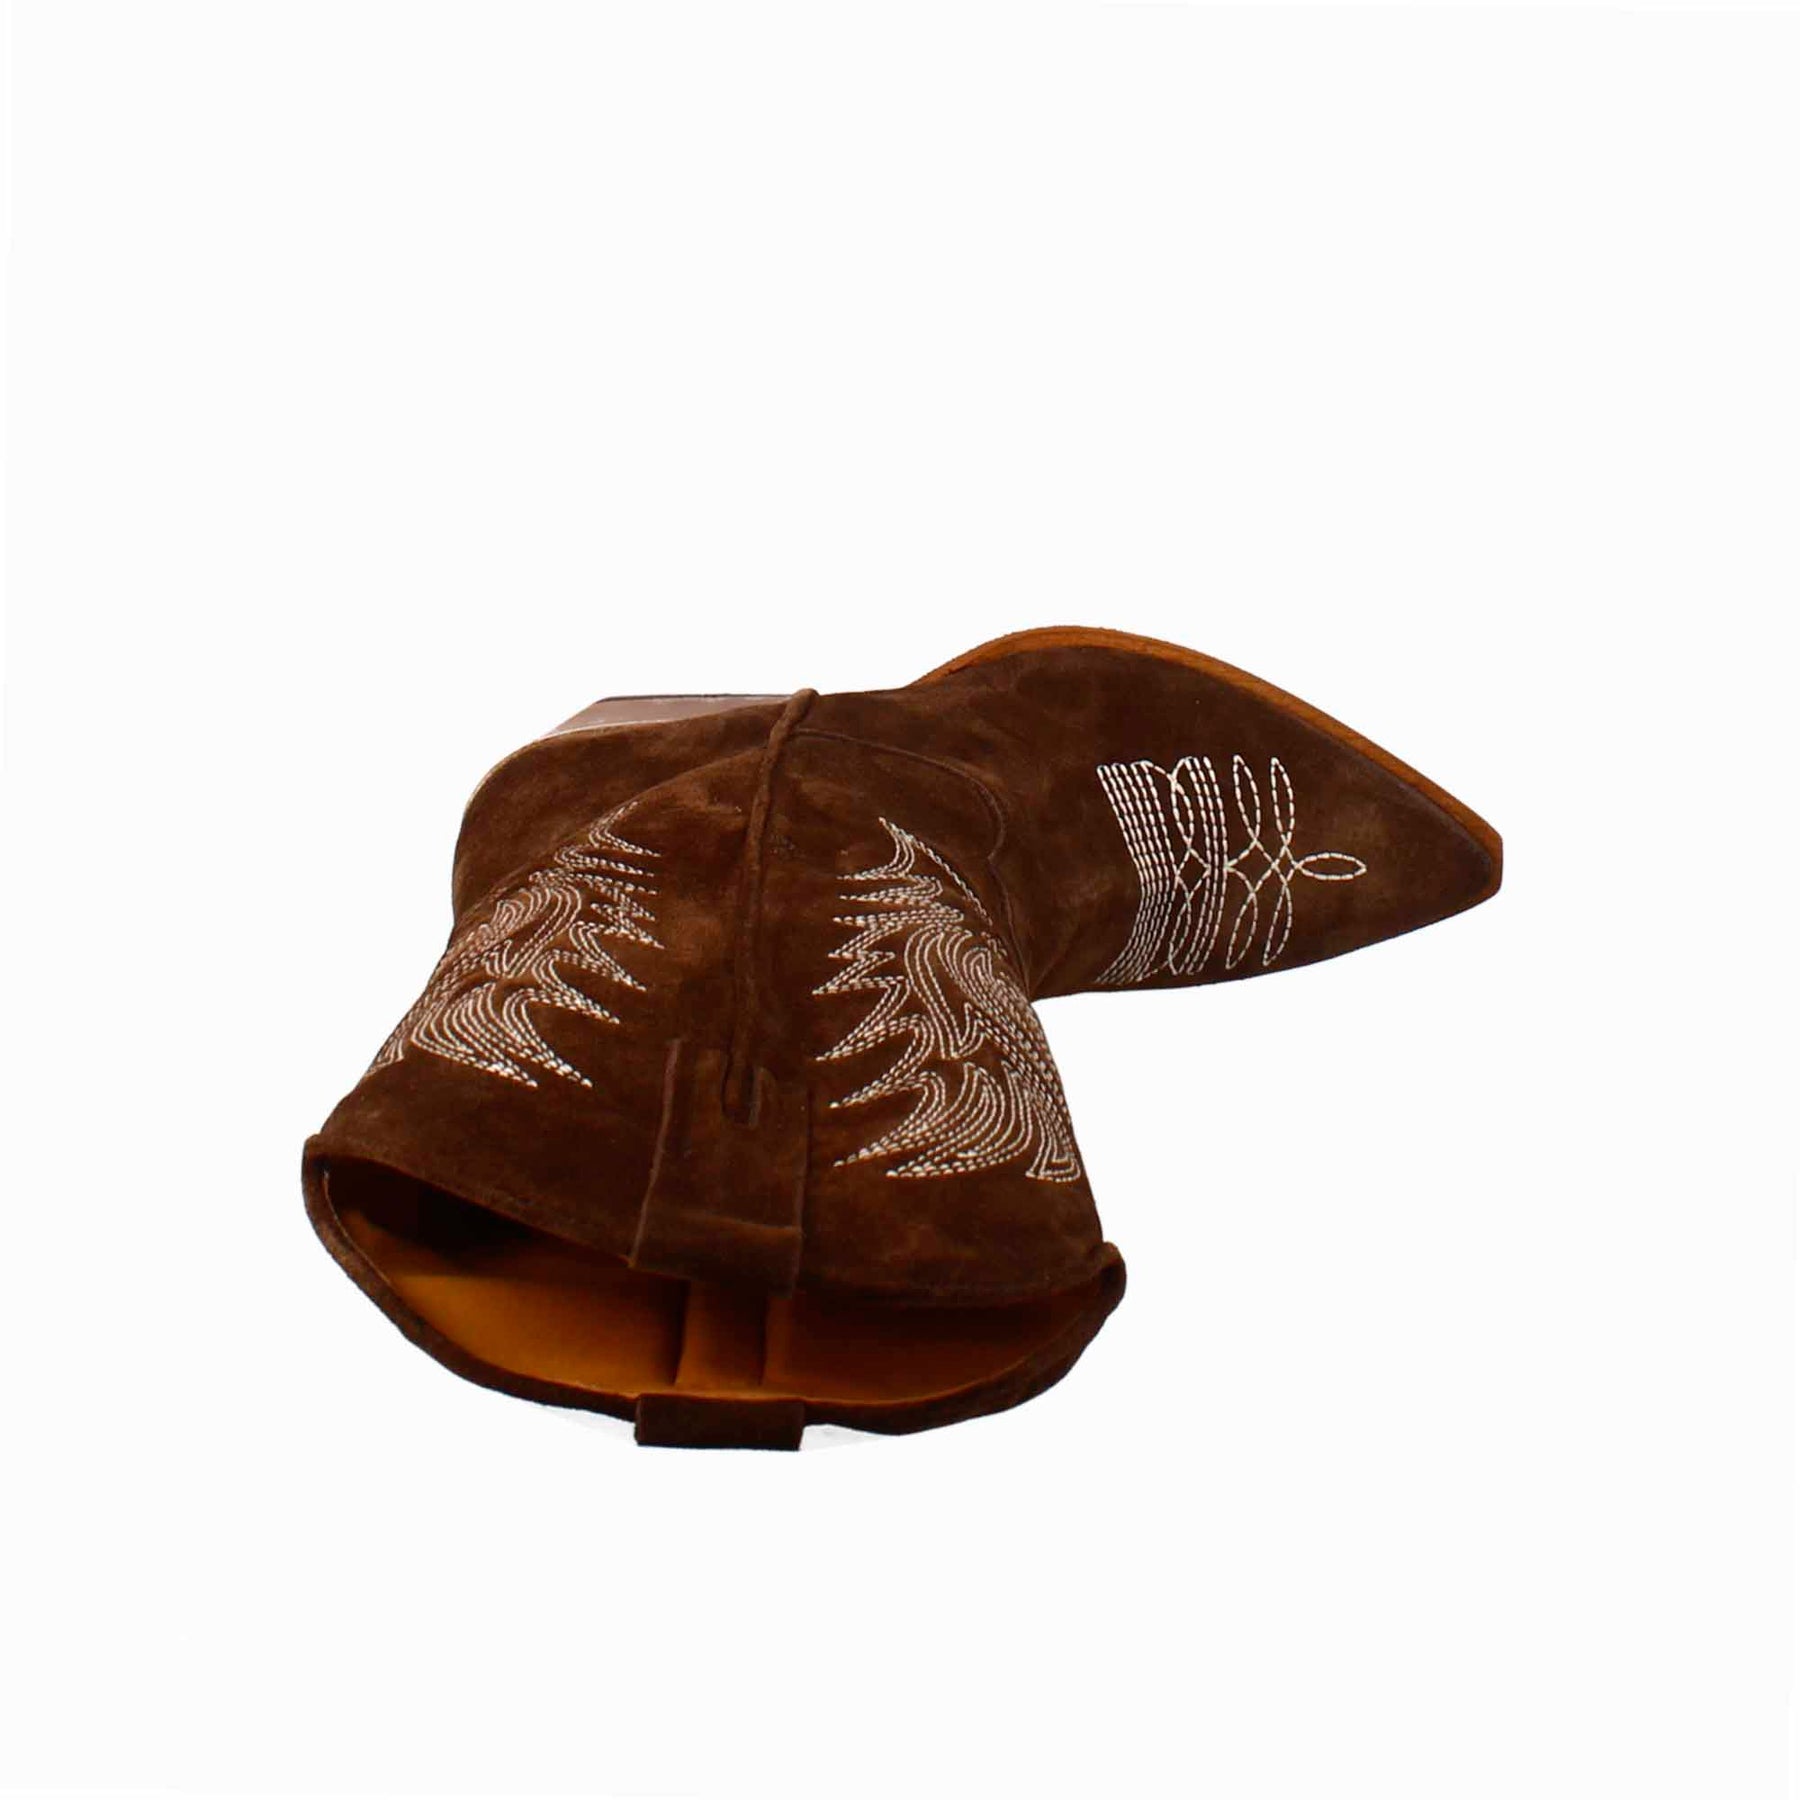 Stivaletto texano da donna in camoscio color cioccolato con ricamo